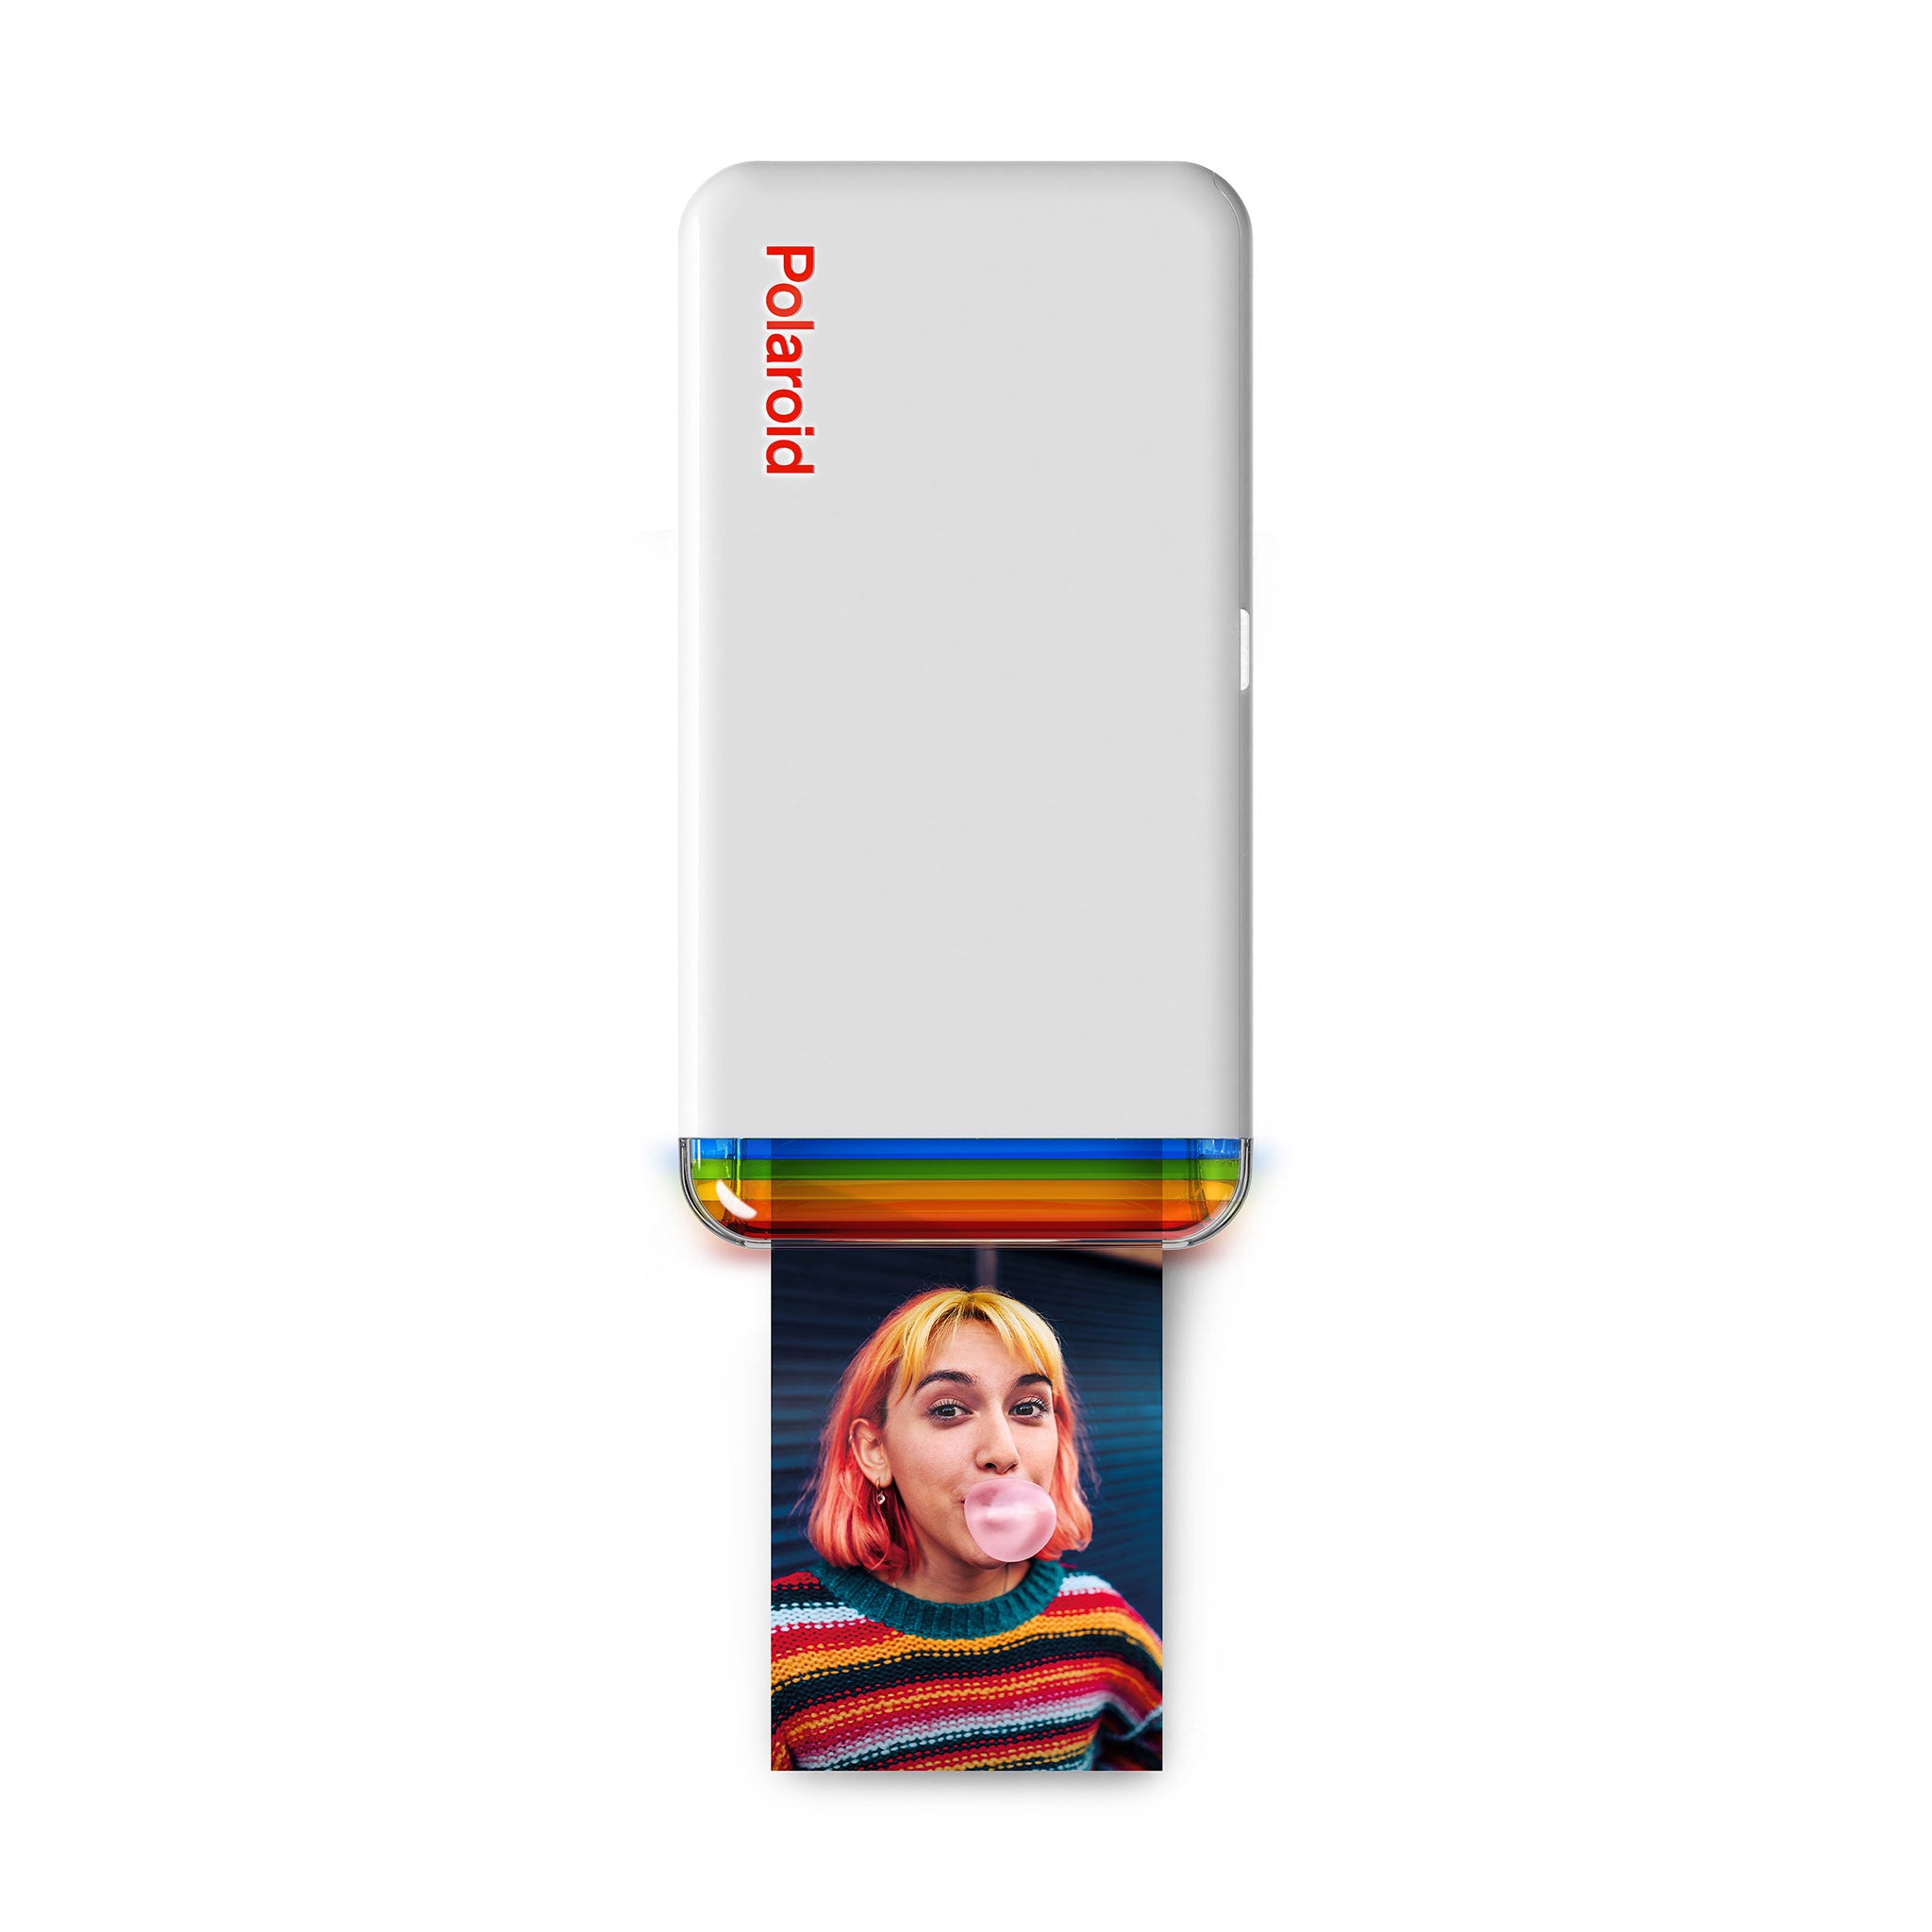 The New Polaroid Goes Digital with the Polaroid Hi-Print